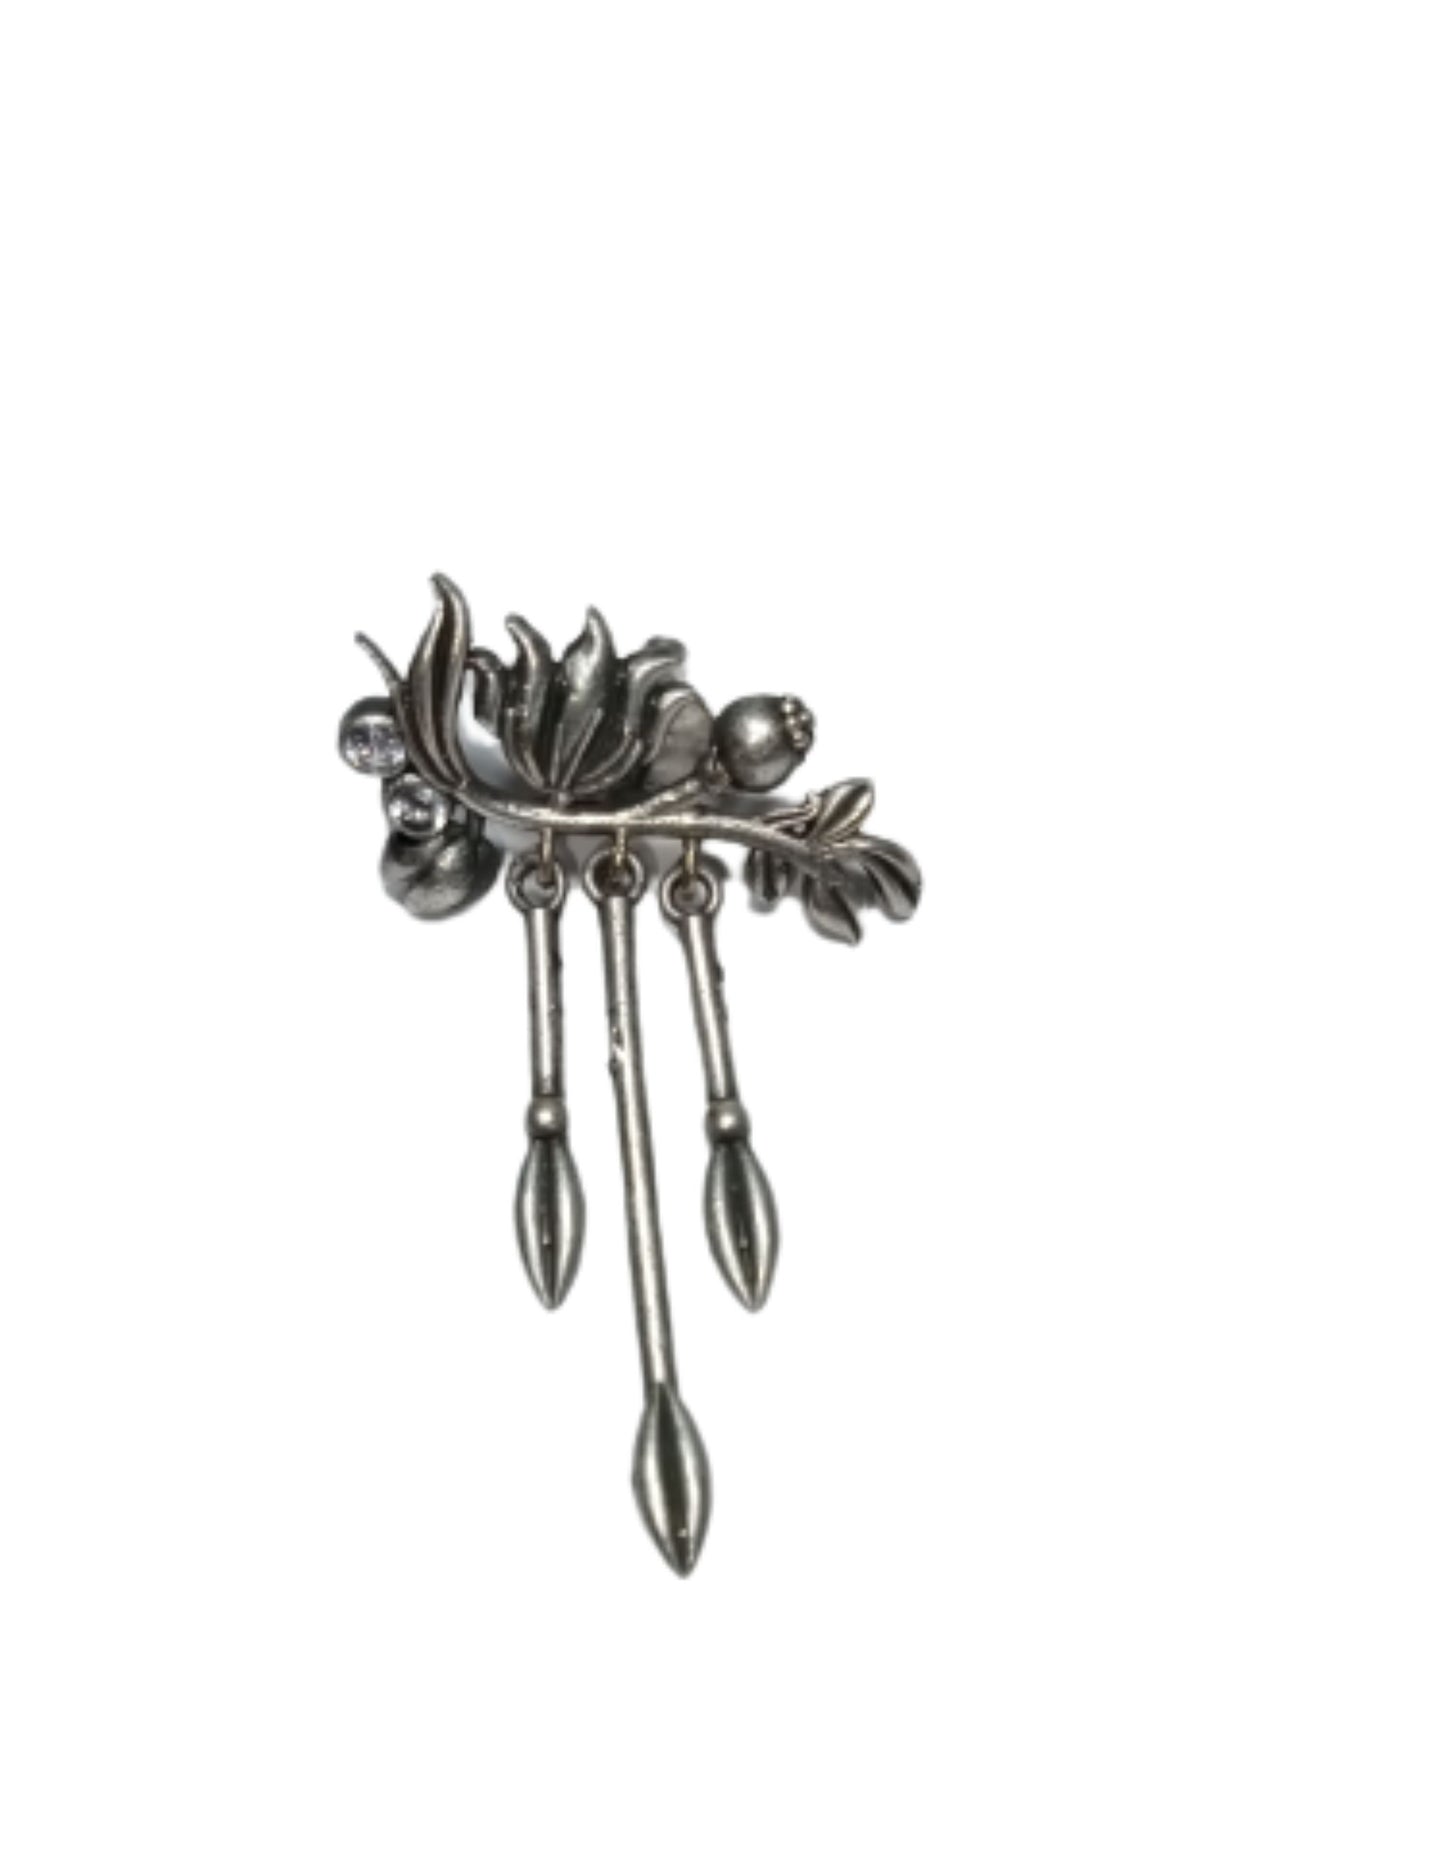 Oxidised earring with lotus design